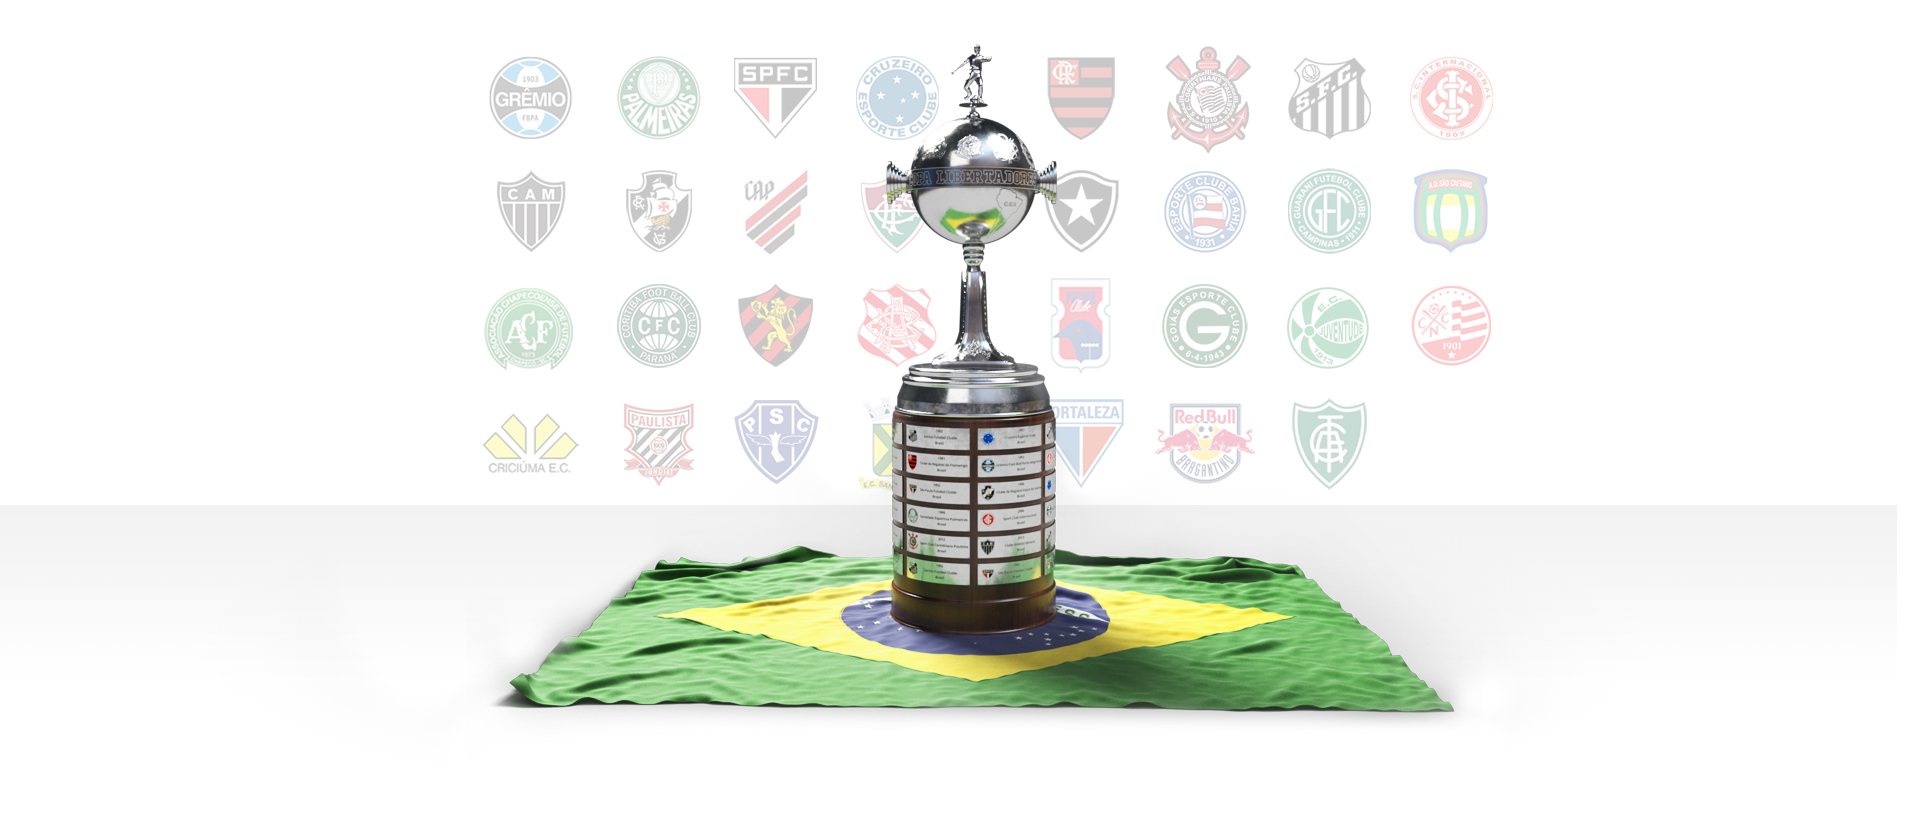 Guia da Libertadores - Arsenal Sarandí